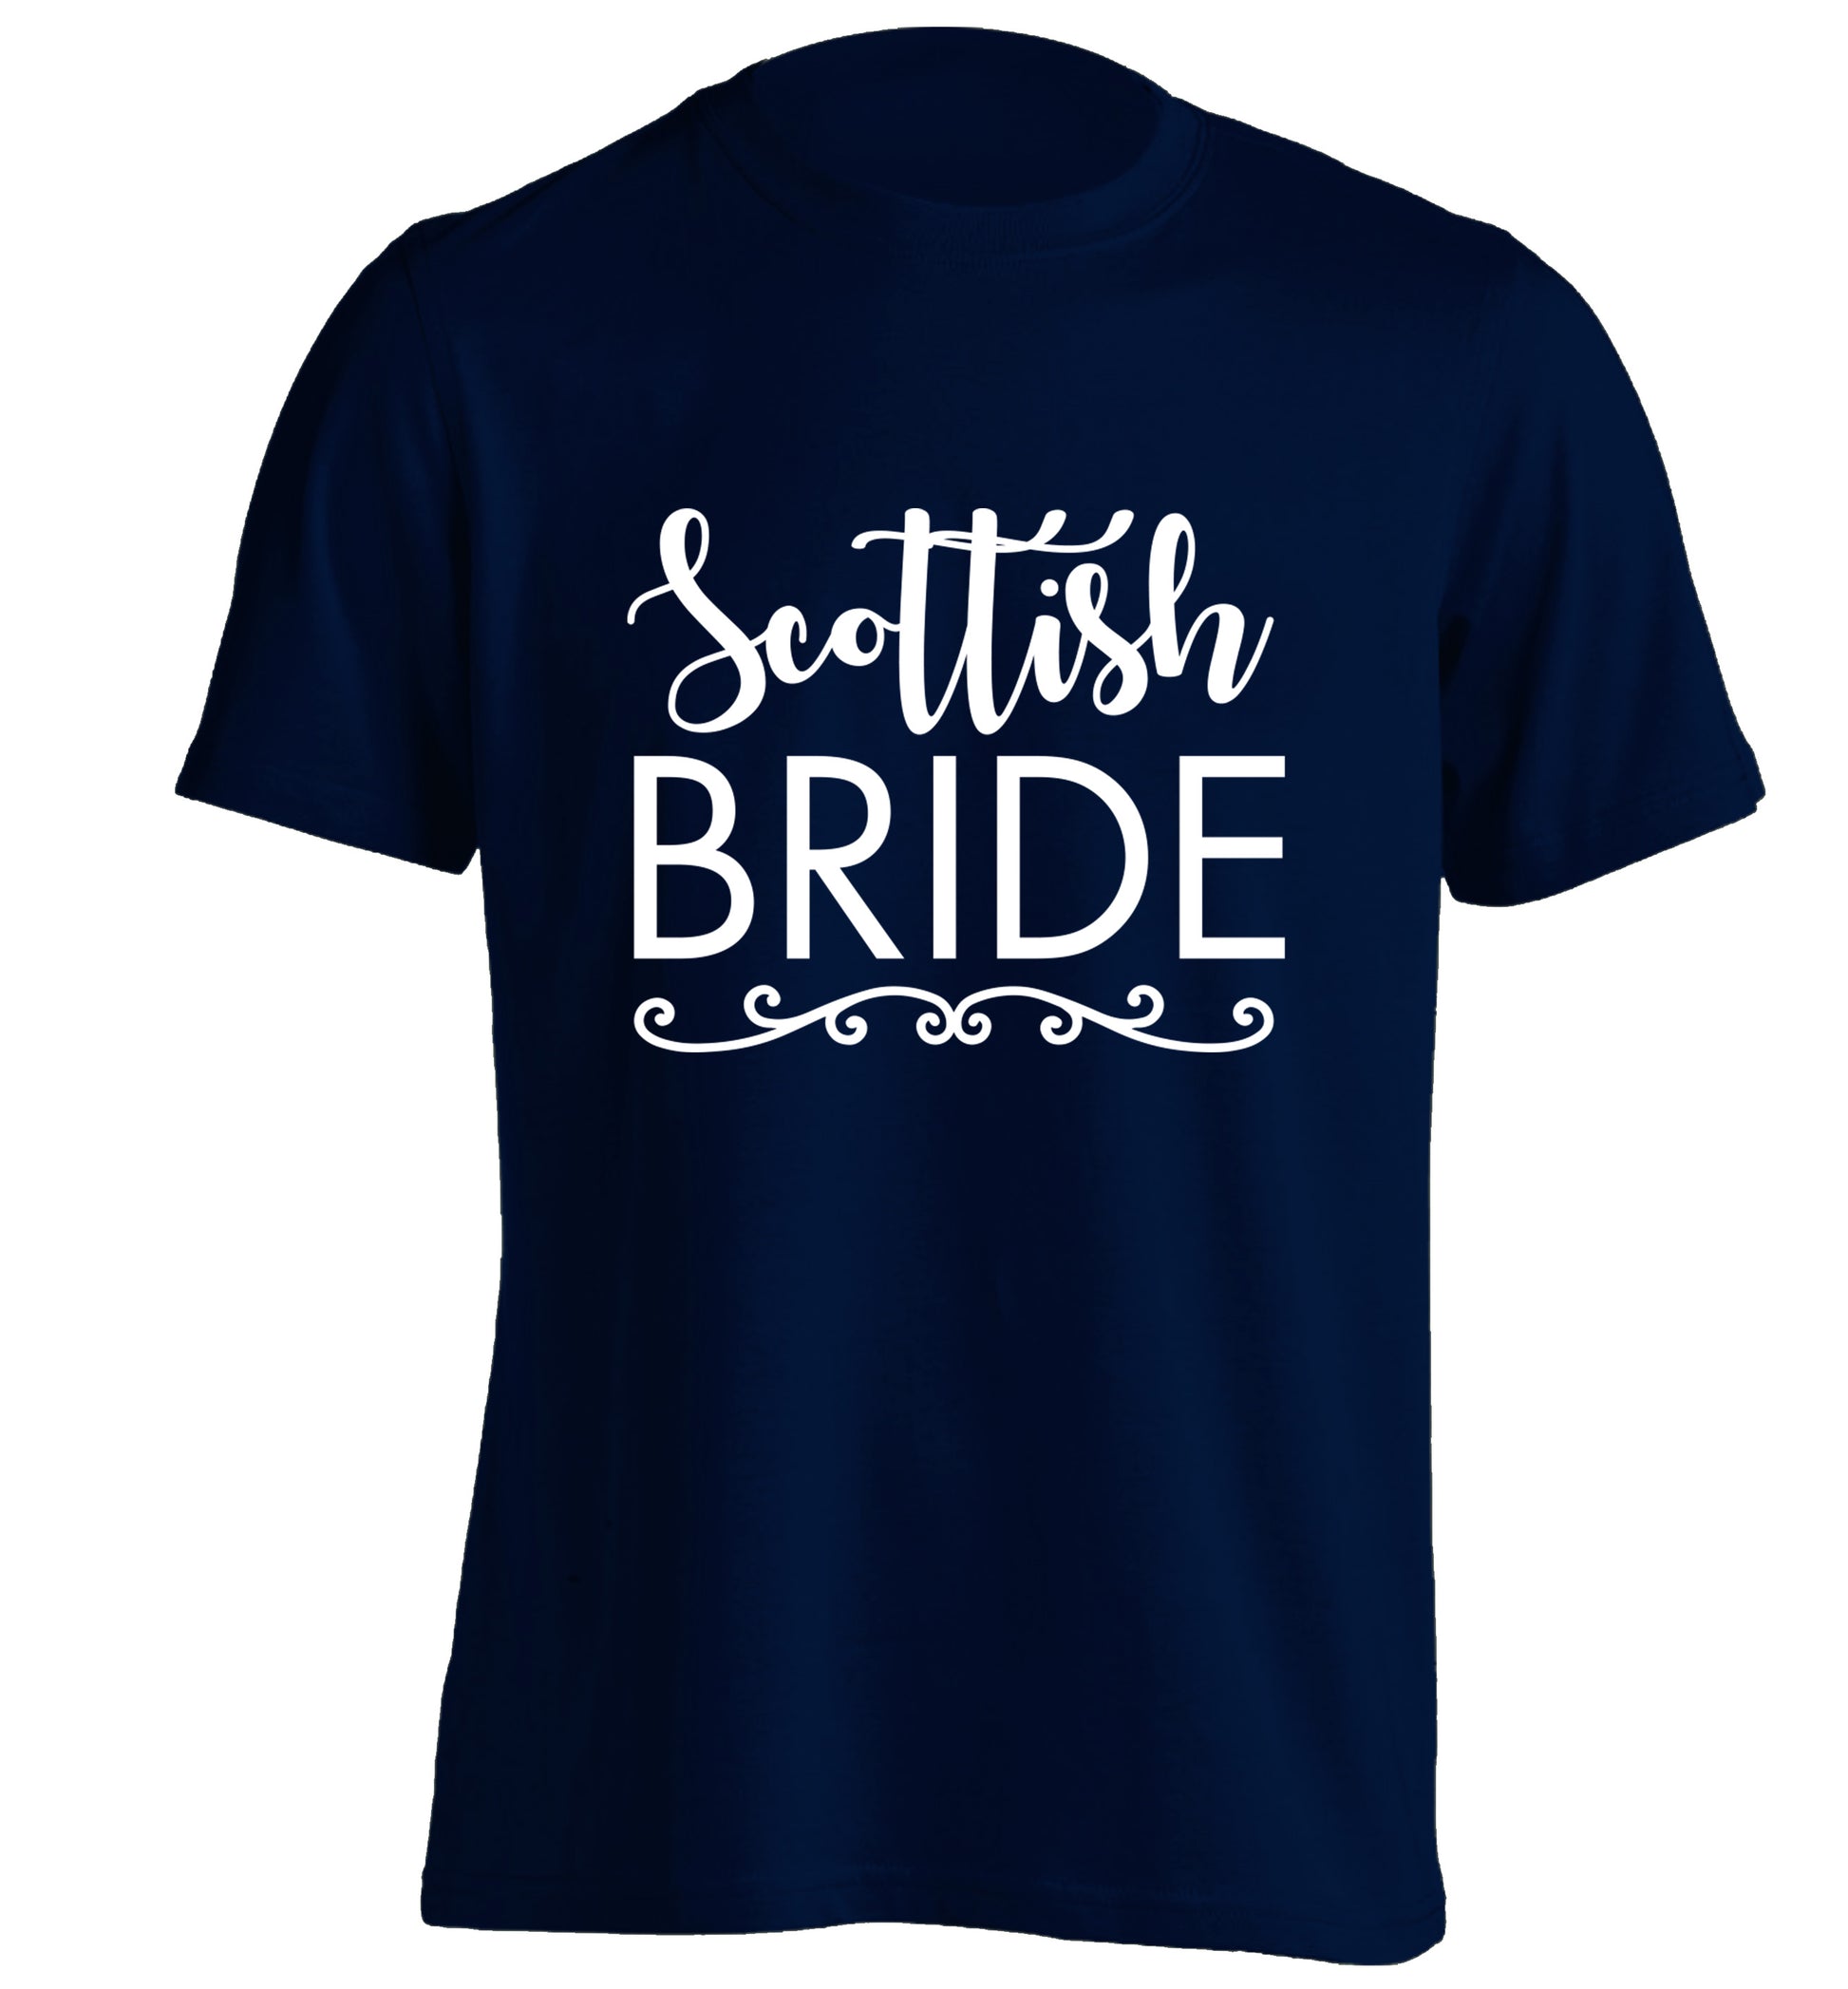 Scottish Bride adults unisex navy Tshirt 2XL